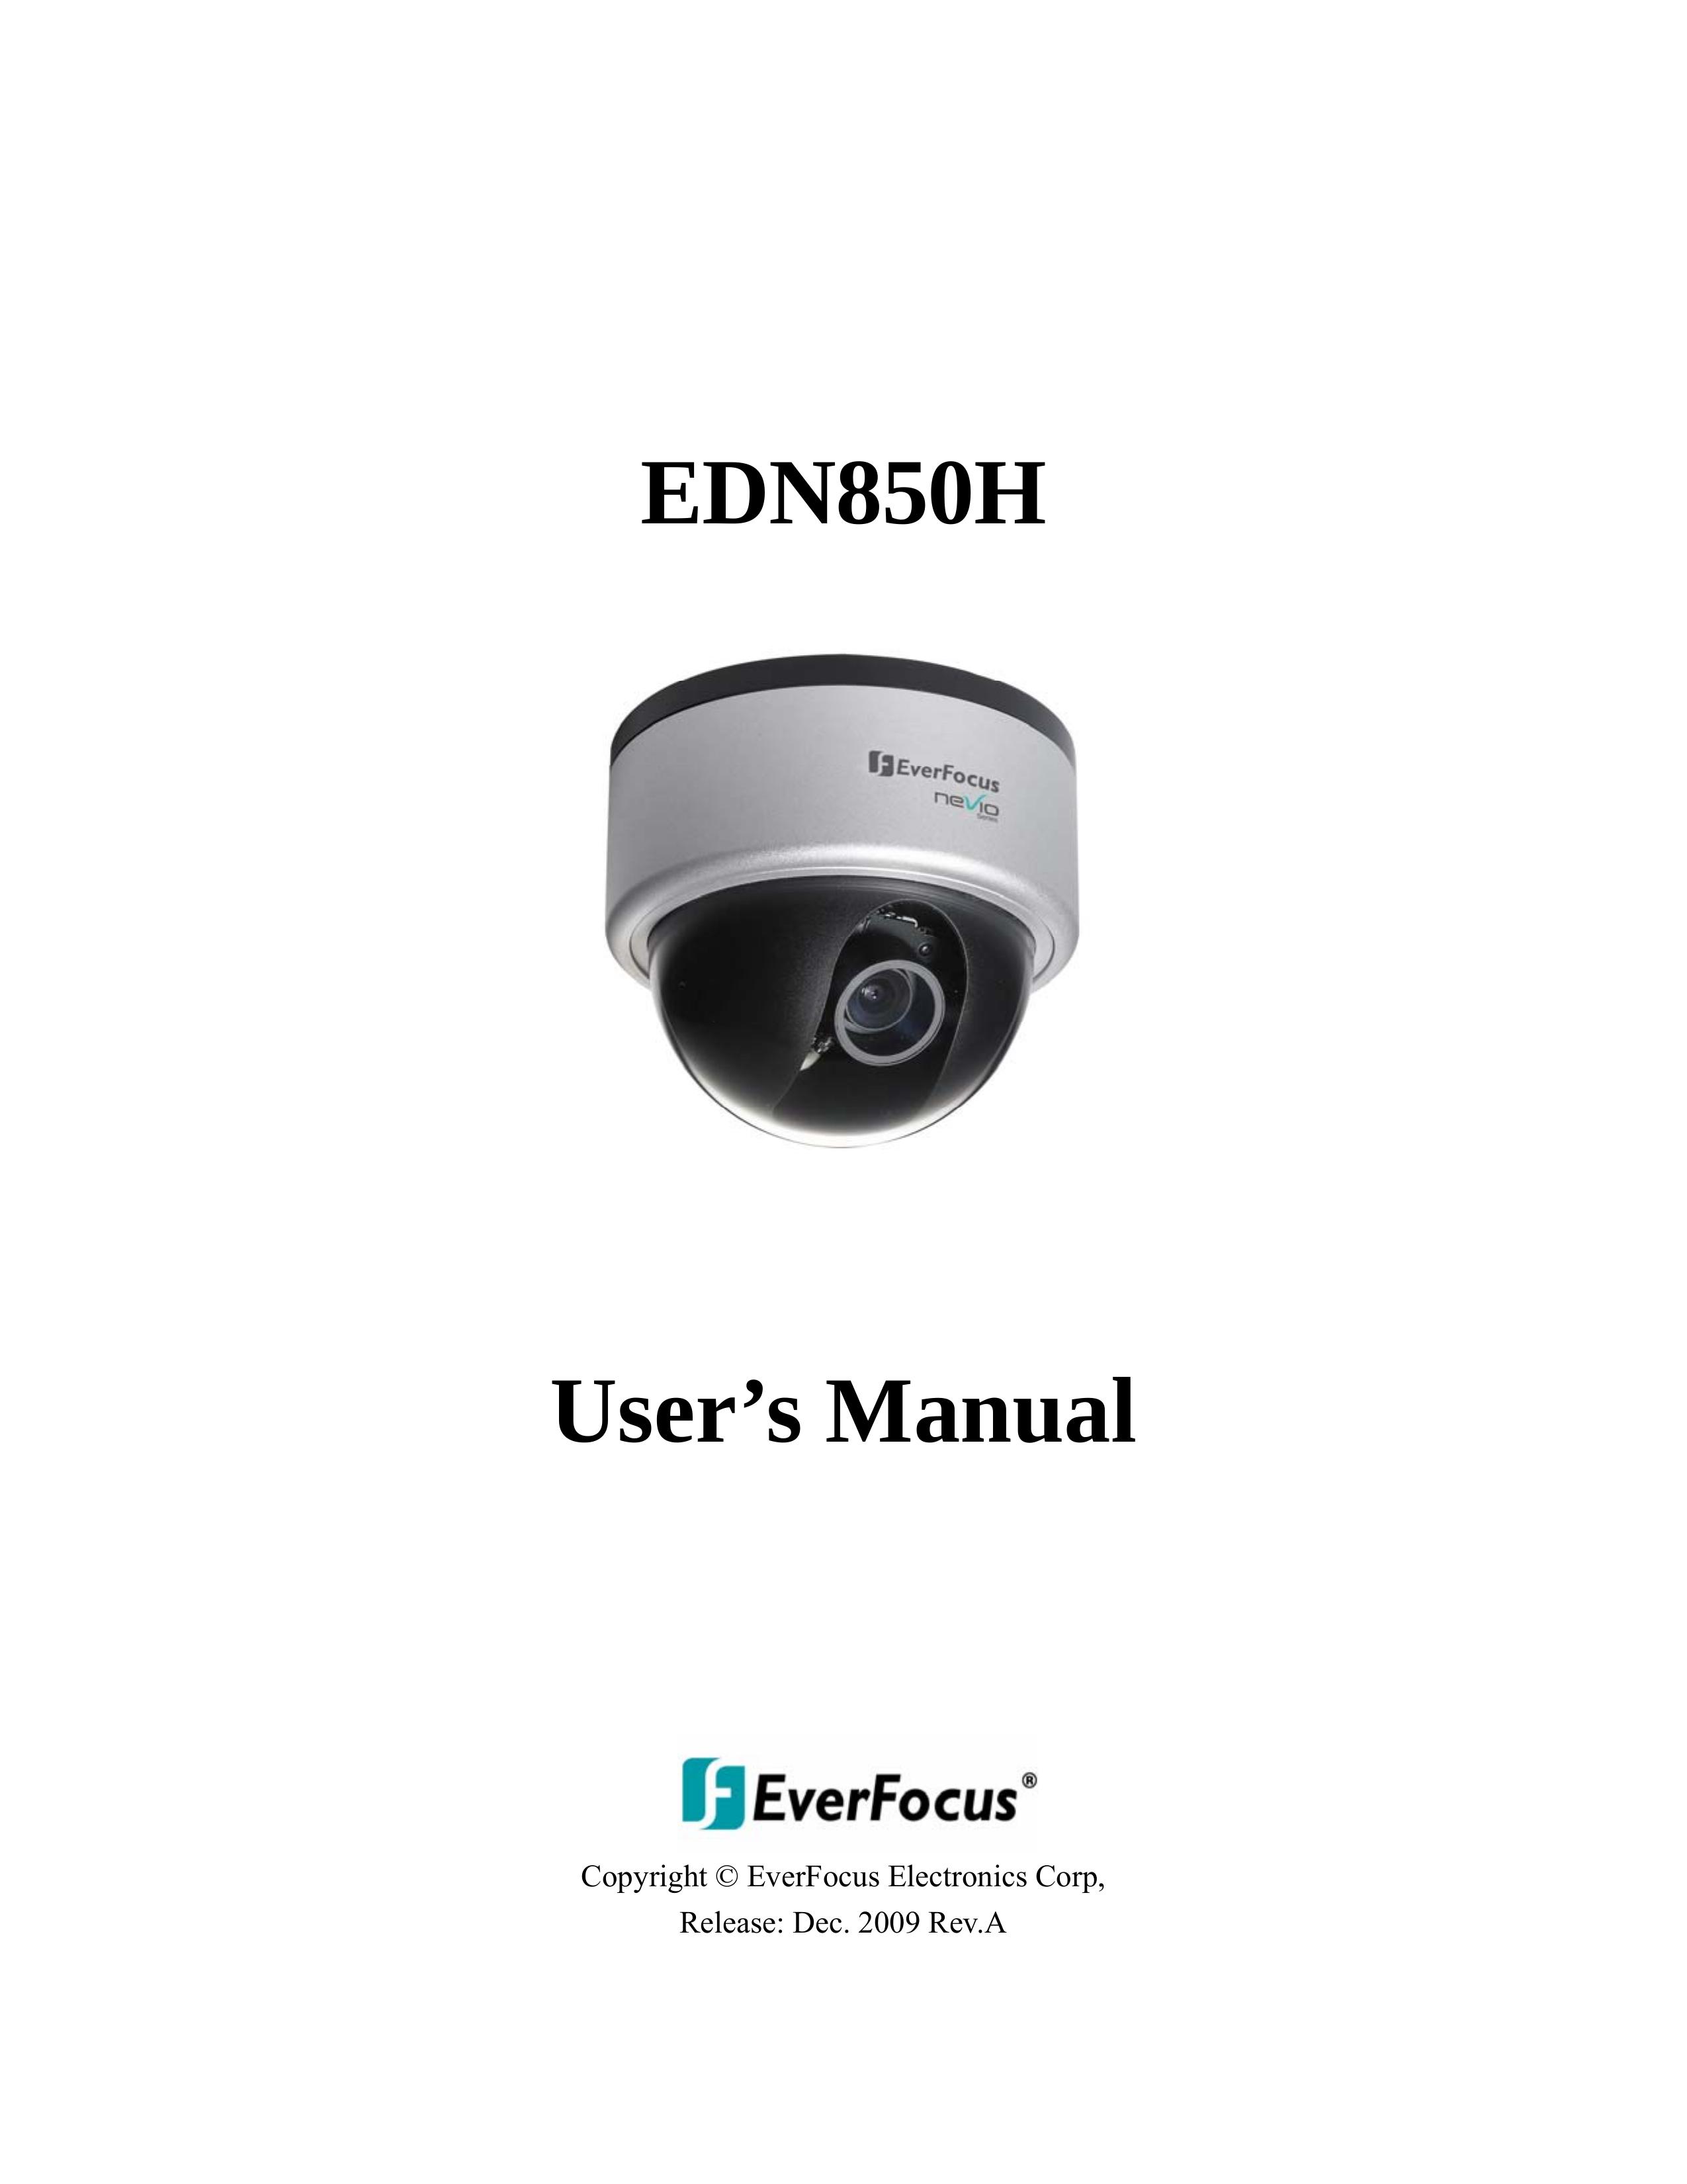 EverFocus EDN850H Security Camera User Manual